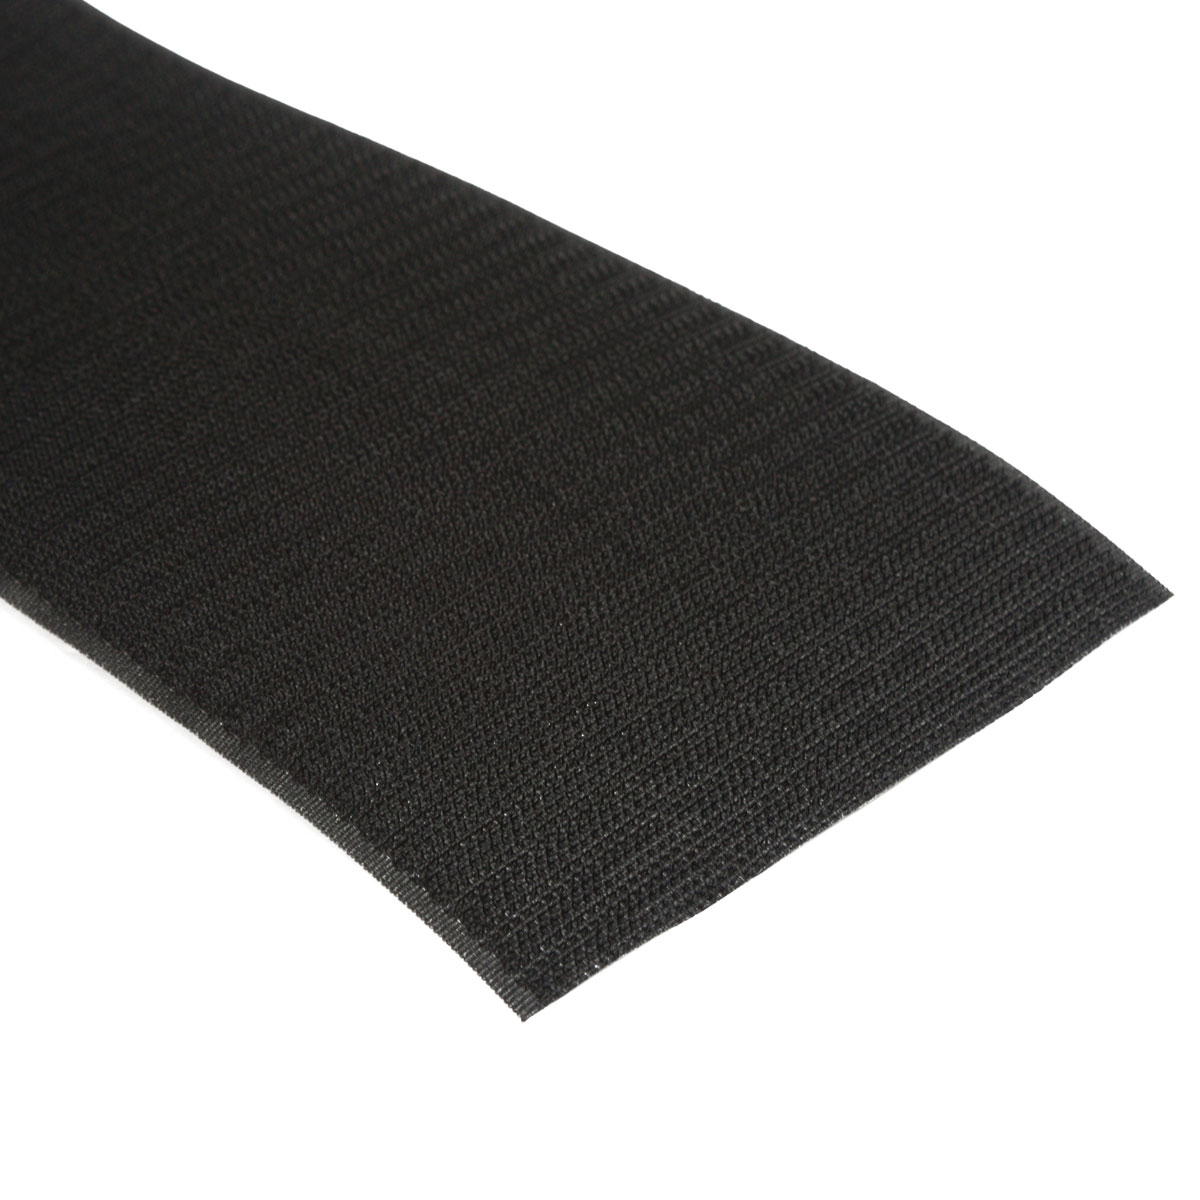 5m-Black-Nylon-Cable-Cover-For-Carpet-1940608-4